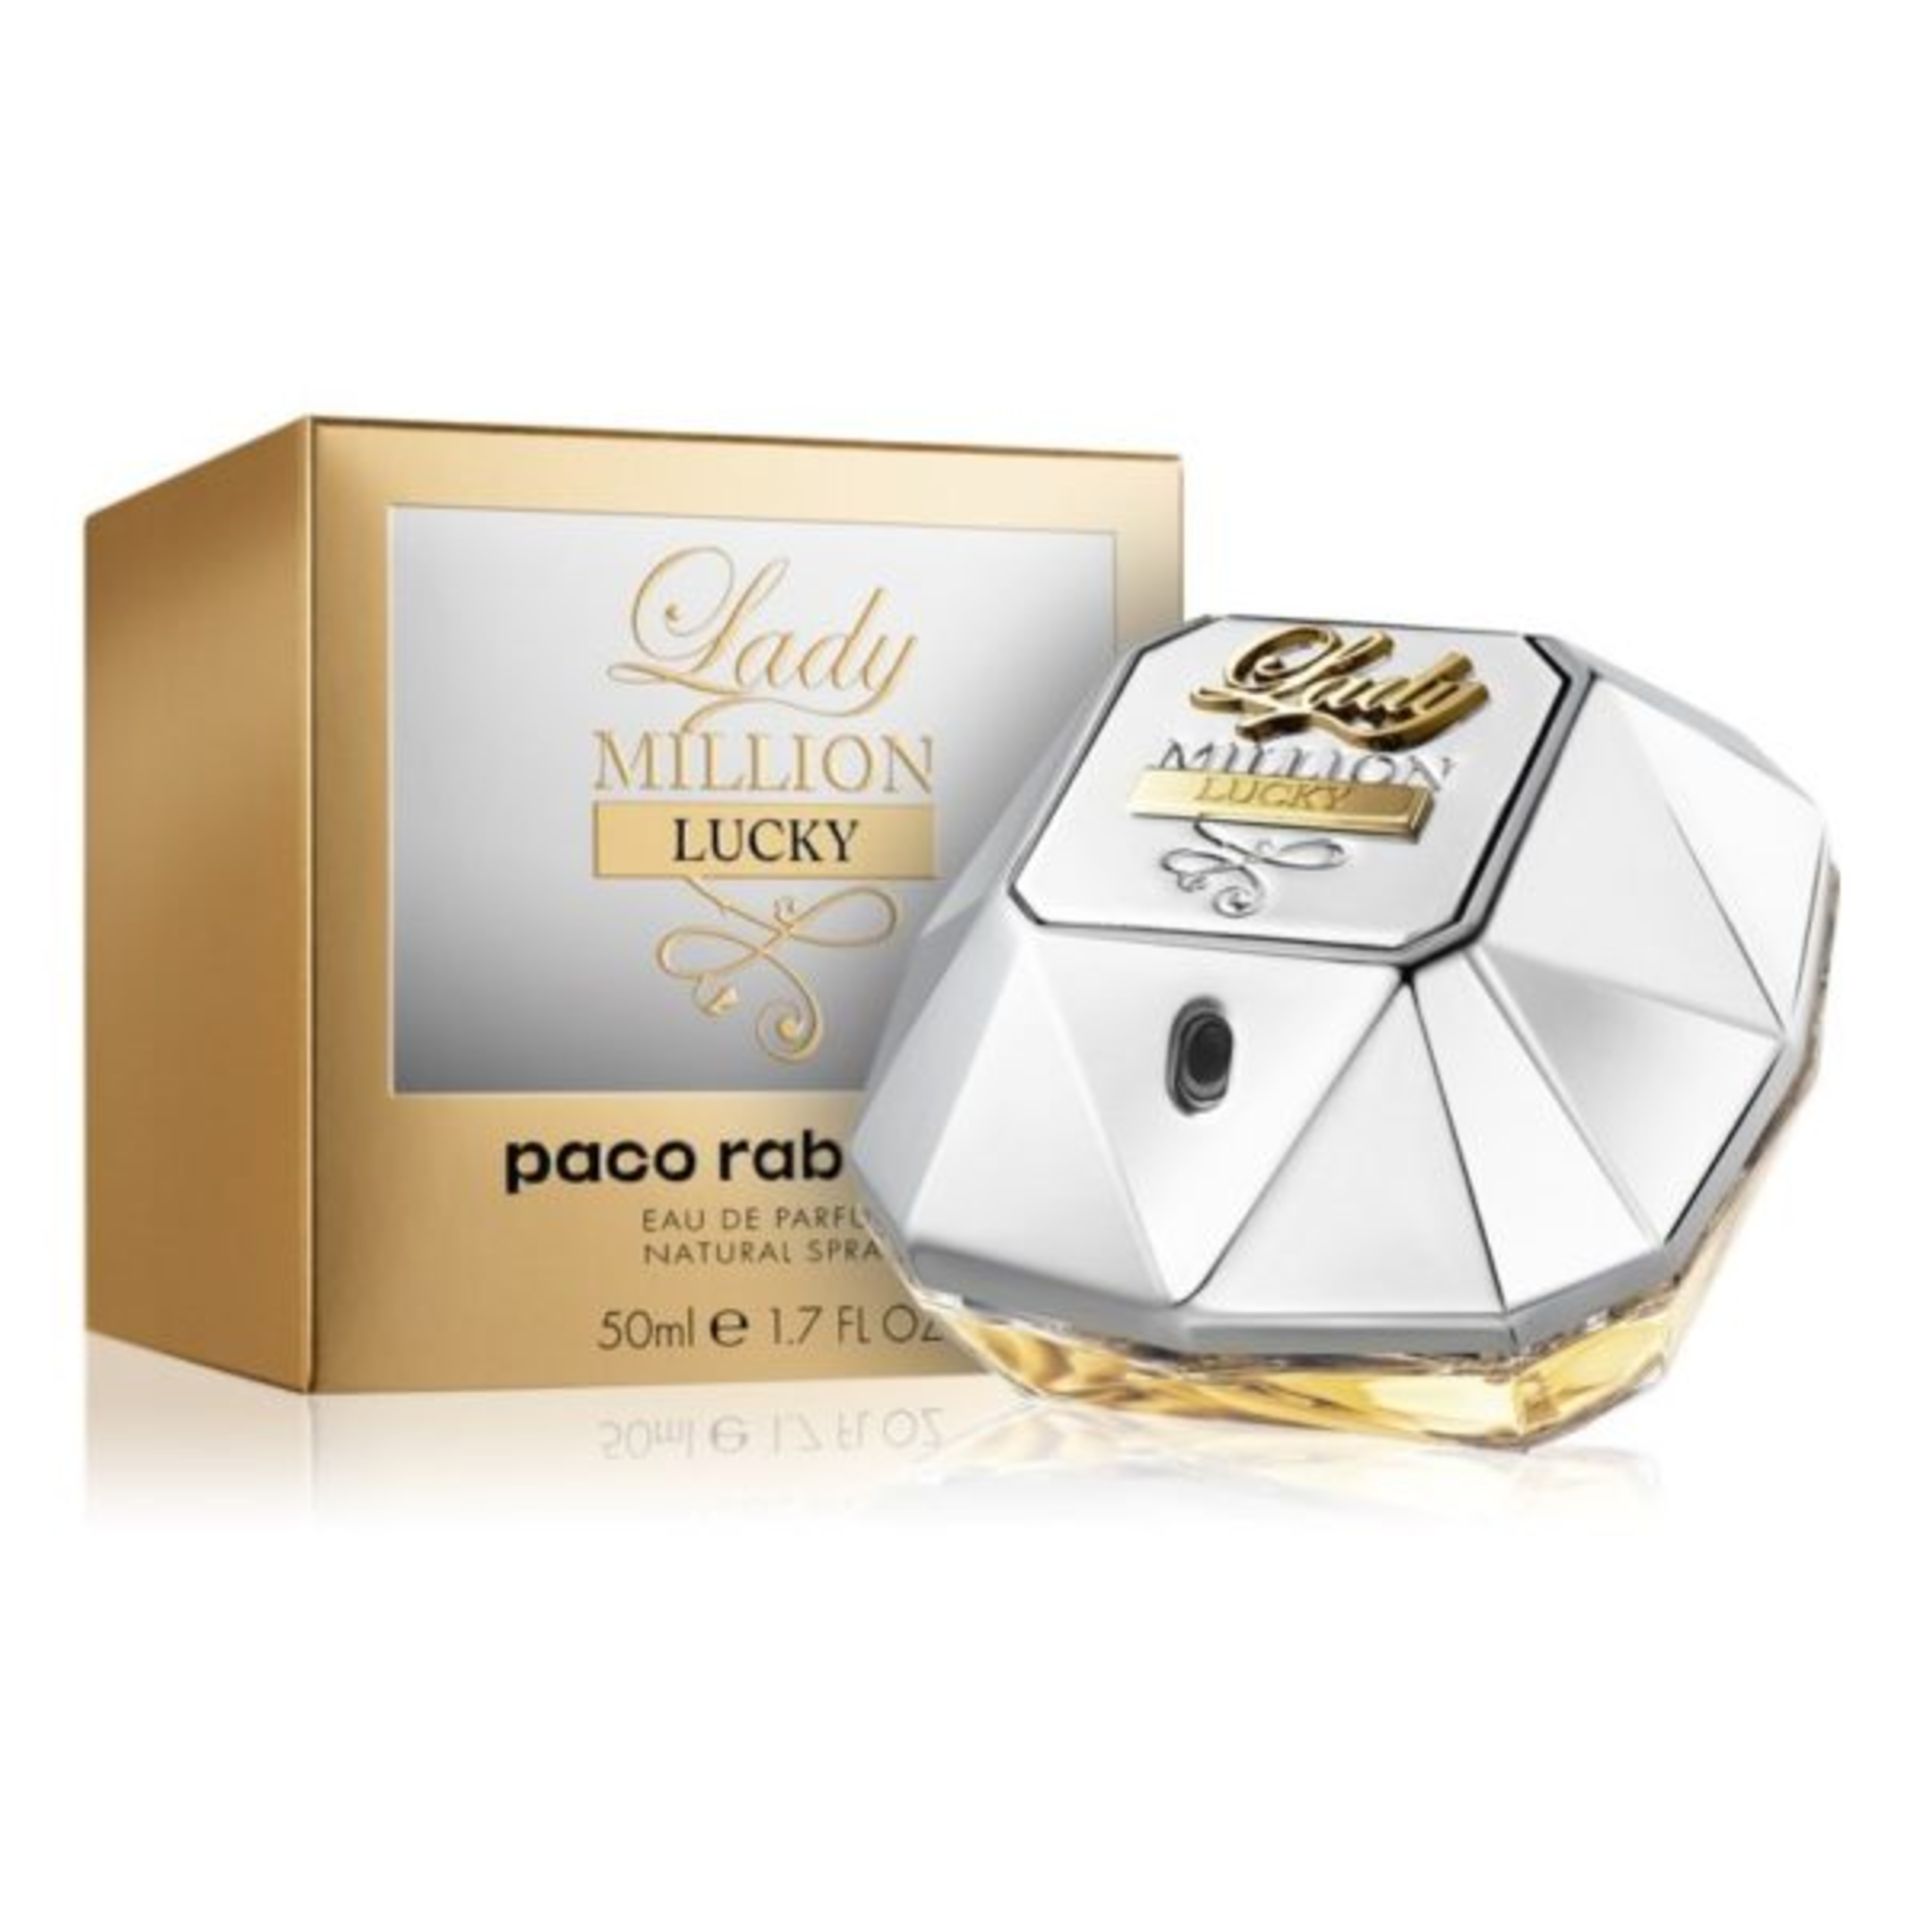 + VAT Brand New Paco Rabanne Lady Million Lucky 50ml EDP.